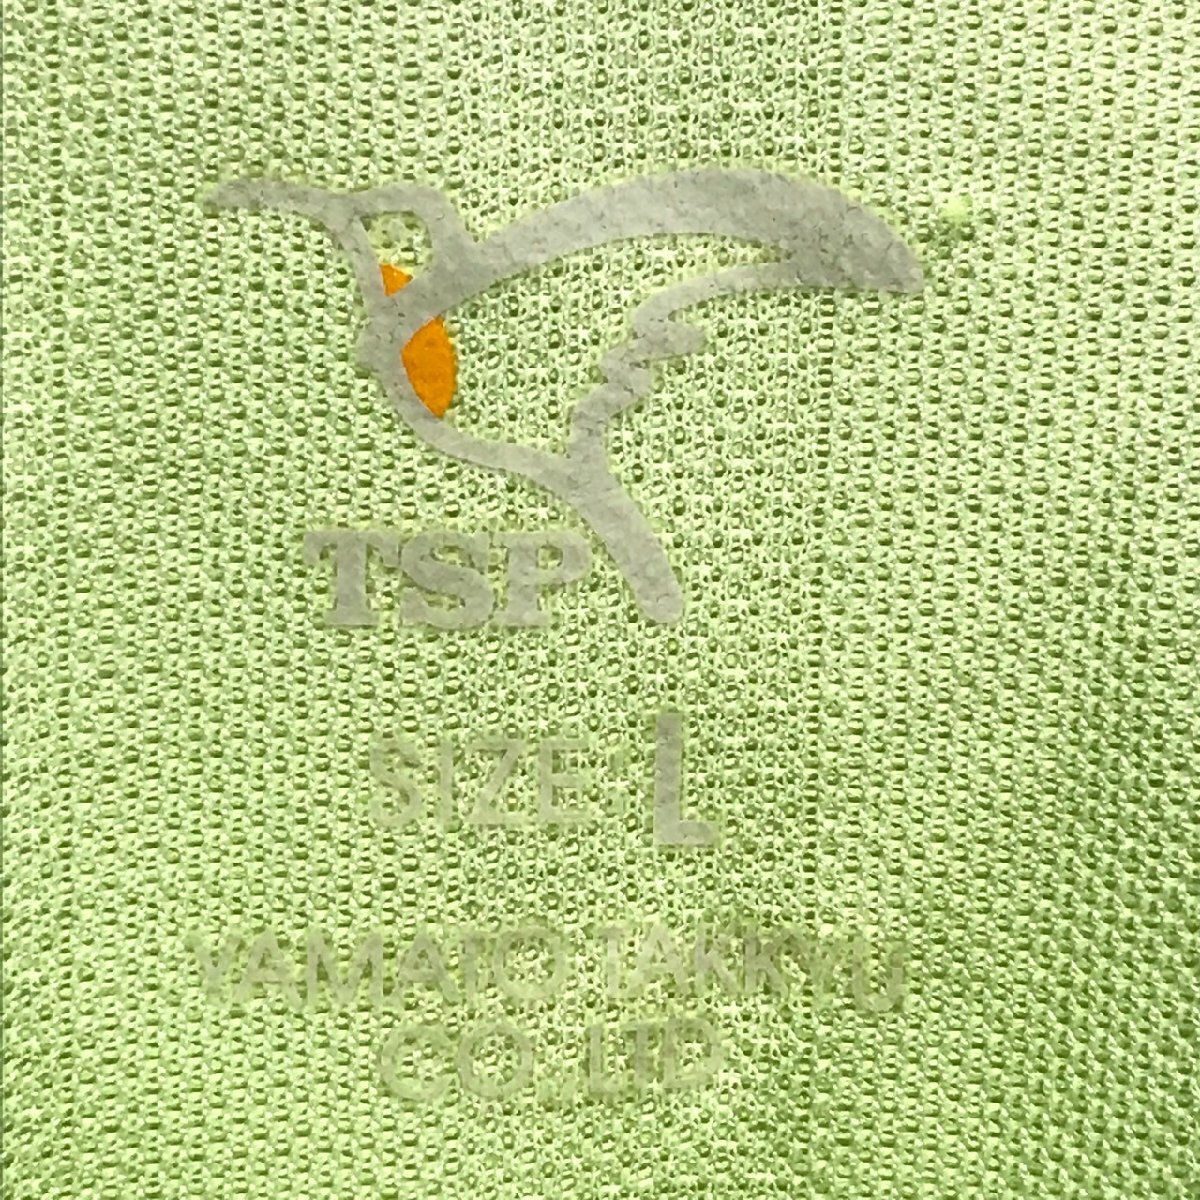 (^w^)b 日本製 YAMATO TAKKYU TSP ユニフォーム 半袖 ポロ シャツ ヤマト 卓球 スポーツ ウェア 通気性 速乾性 グリーン L 8729iE_画像8